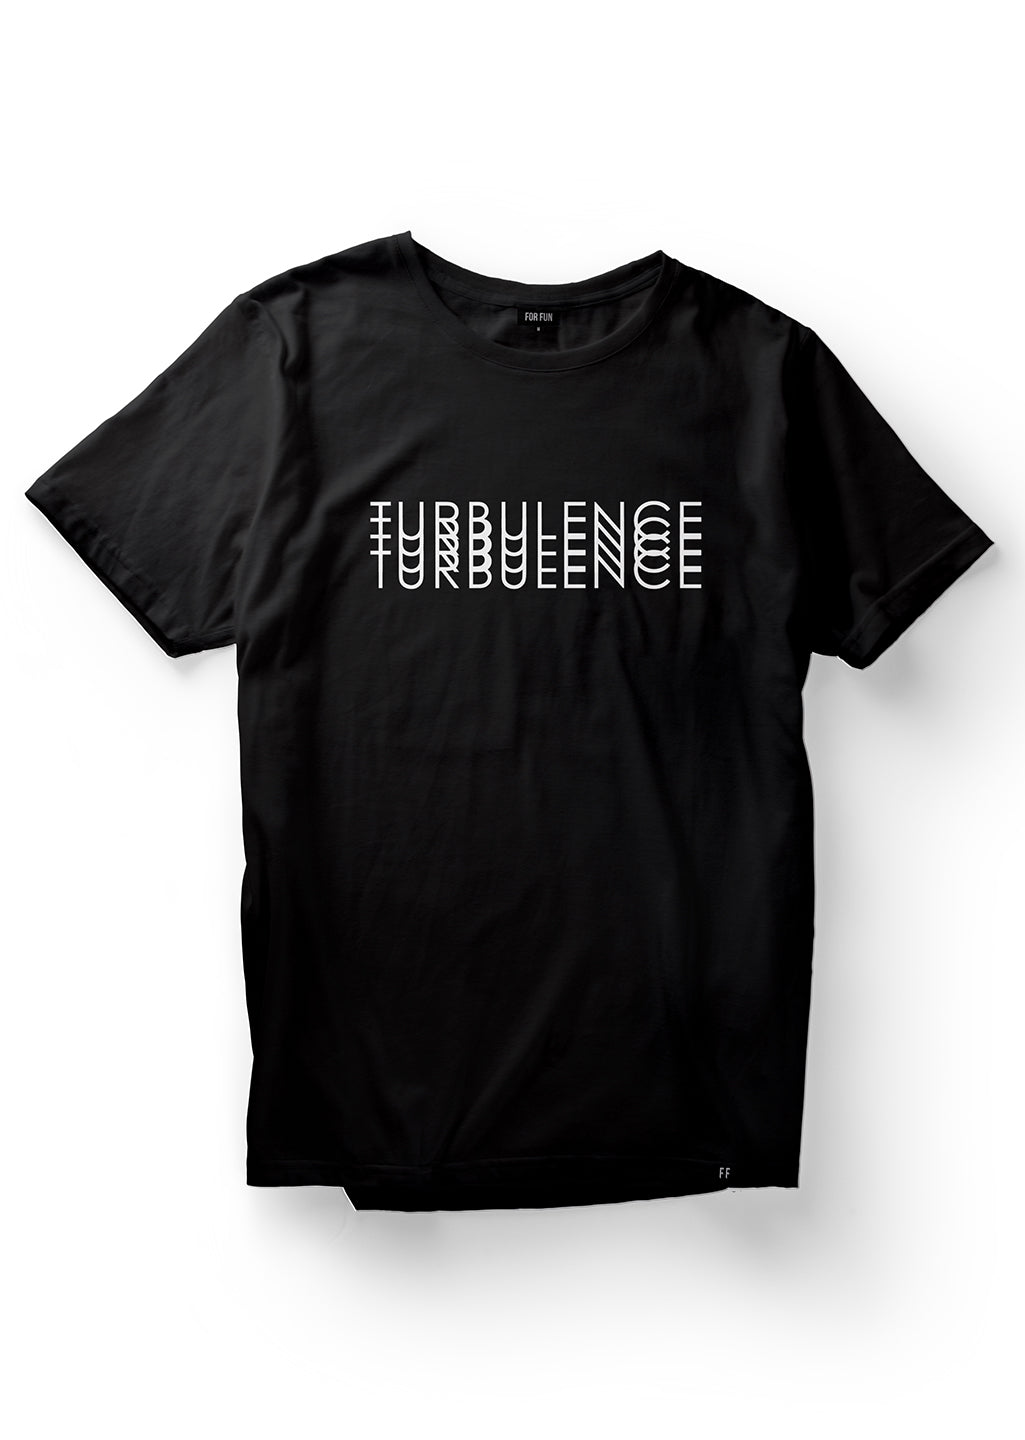 Turbulence / T-shirt